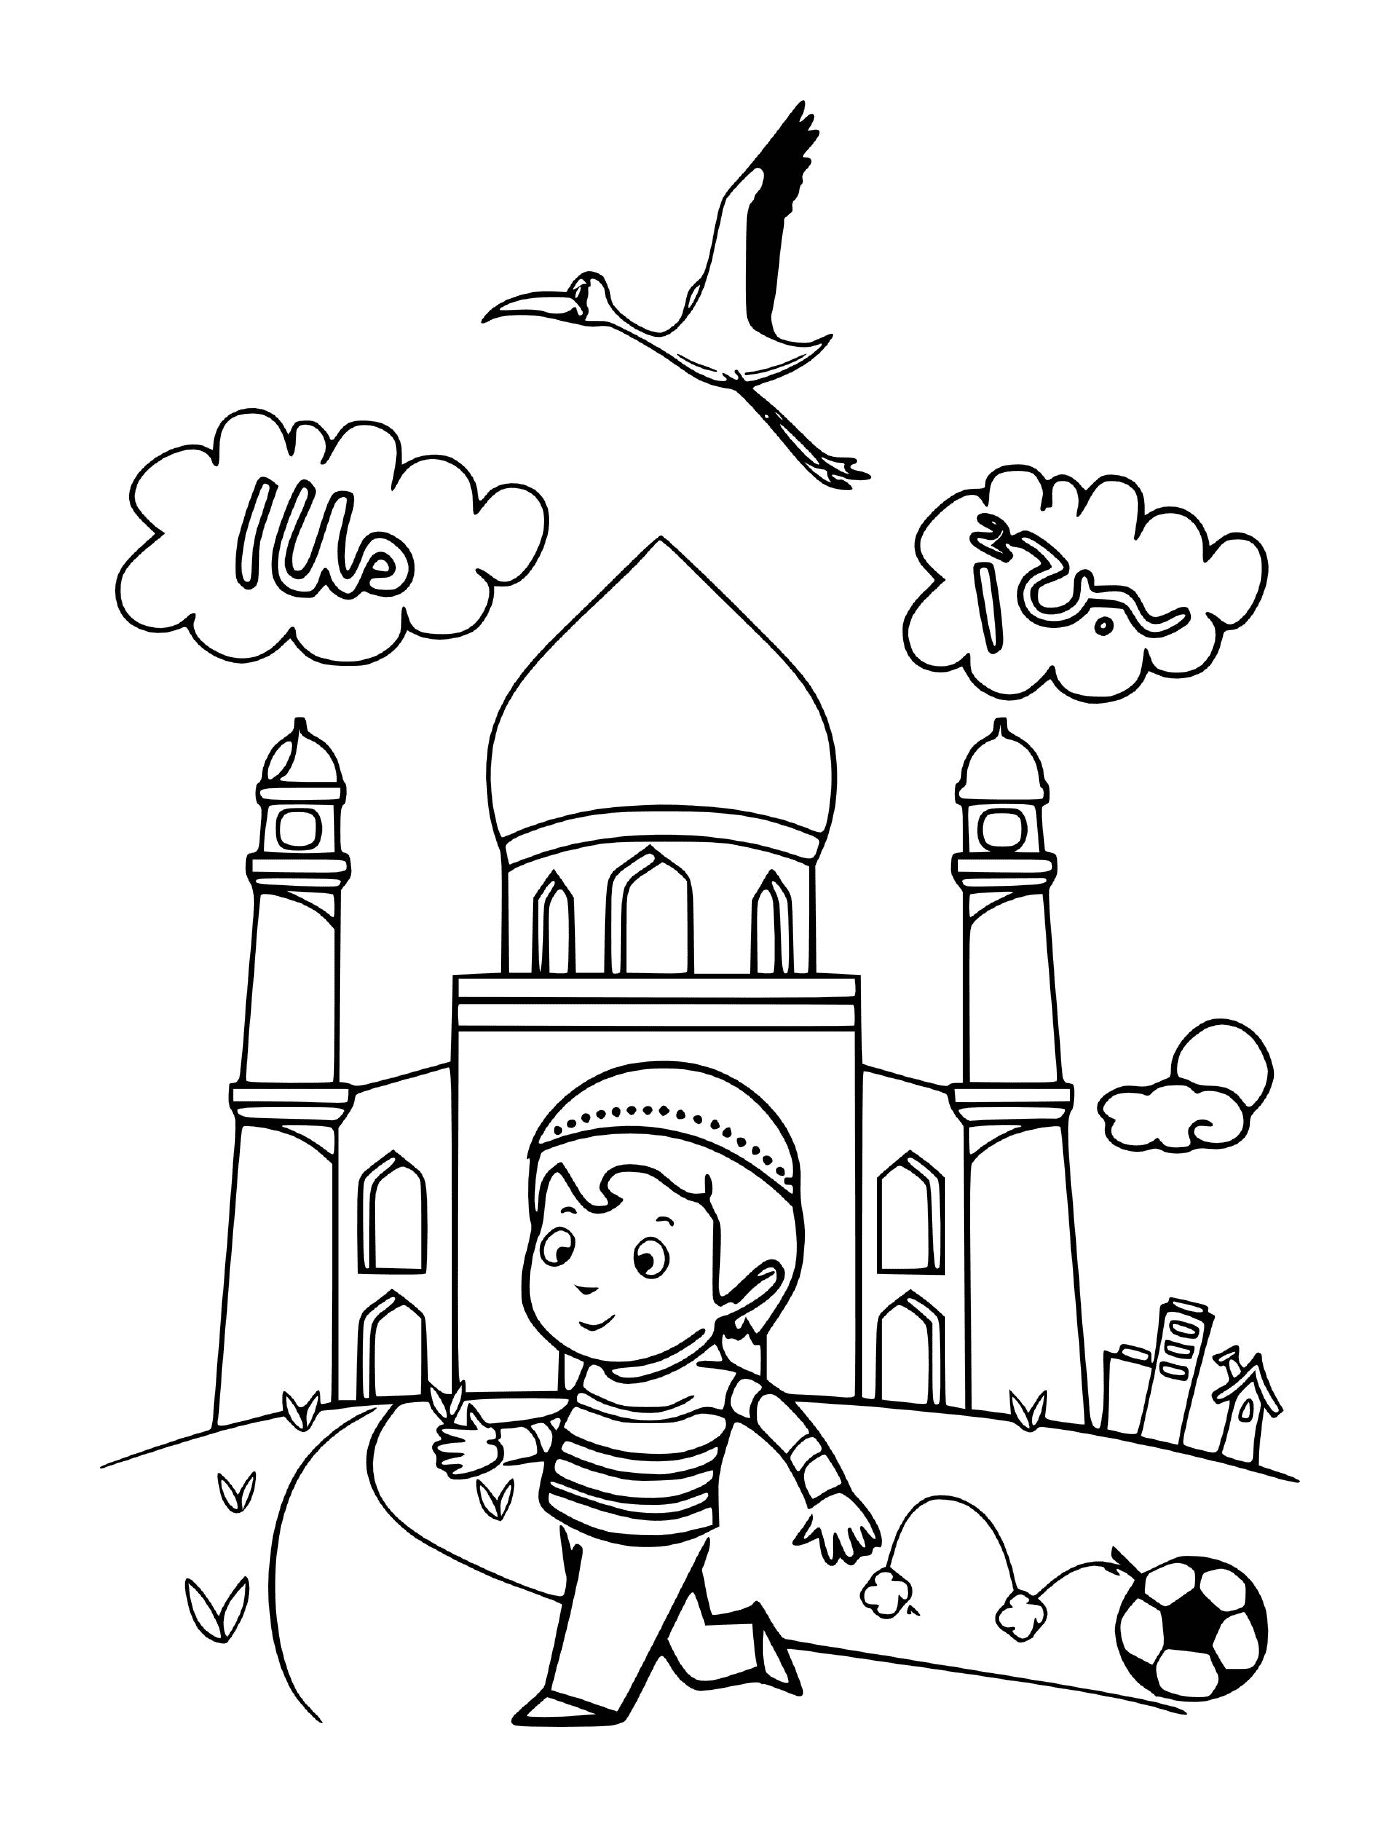  Criança muçulmana na frente da mesquita 